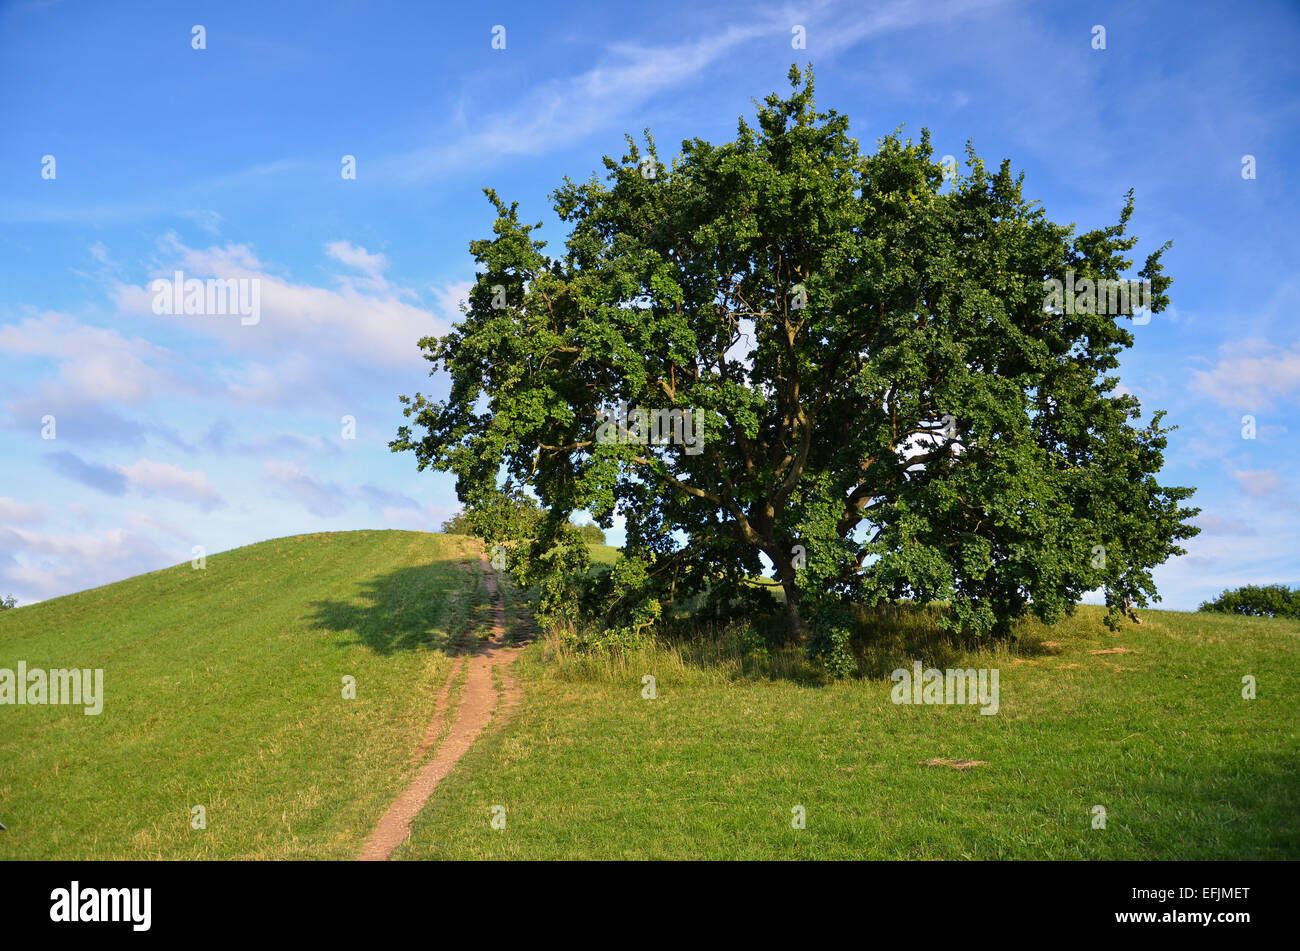 Tree on a hilltop, olympiapark germany Stock Photo